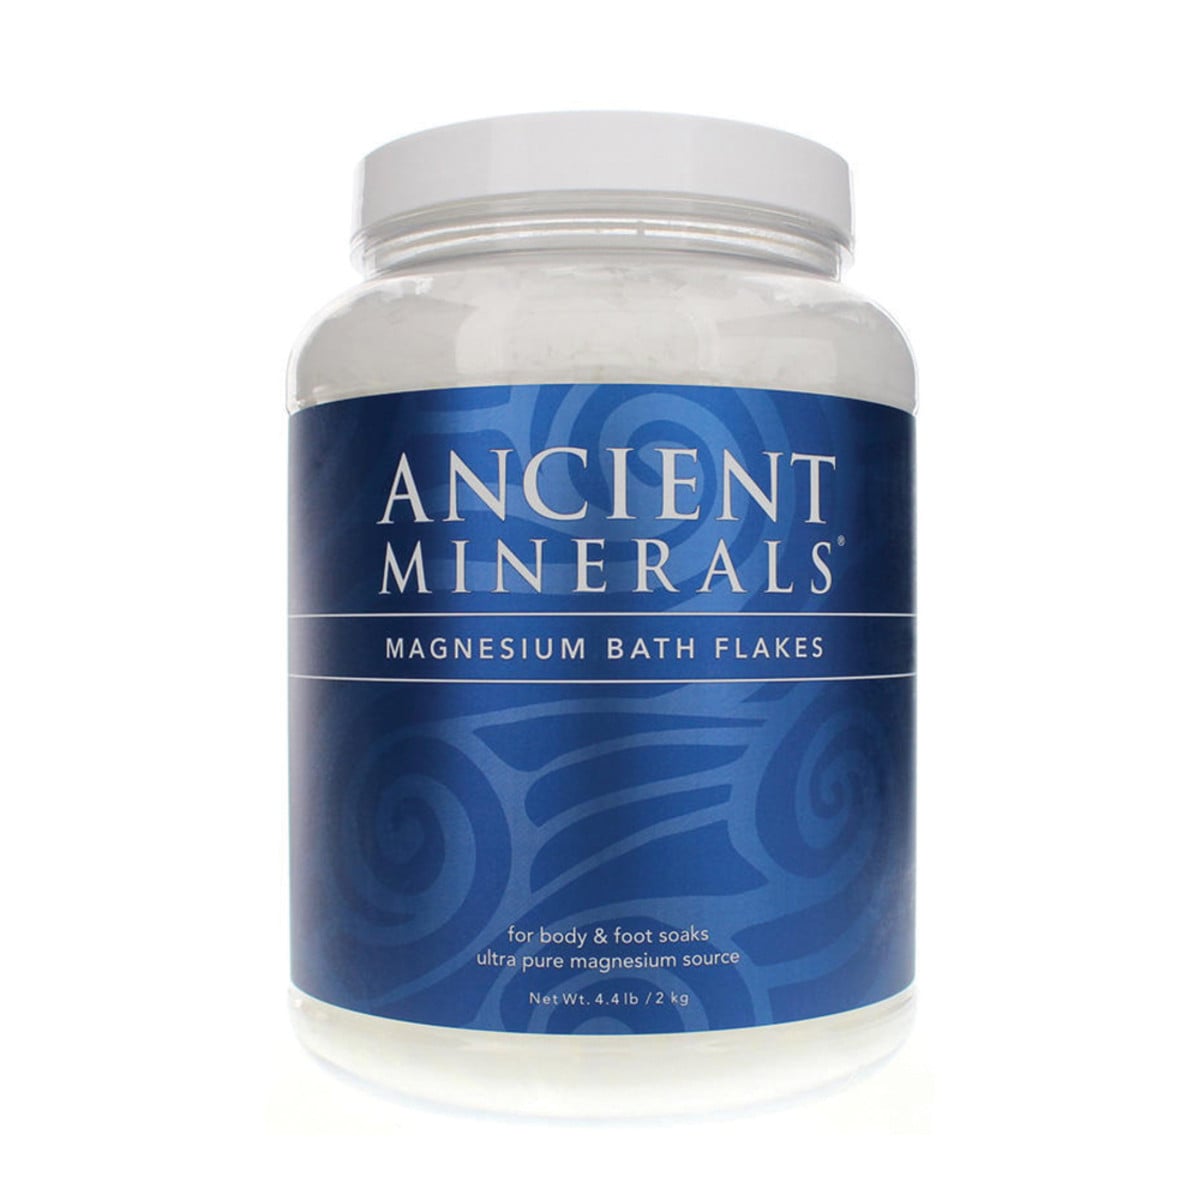 ANCIENT MINERALS - Magnesium (Epsom) Bath Flakes 2kg